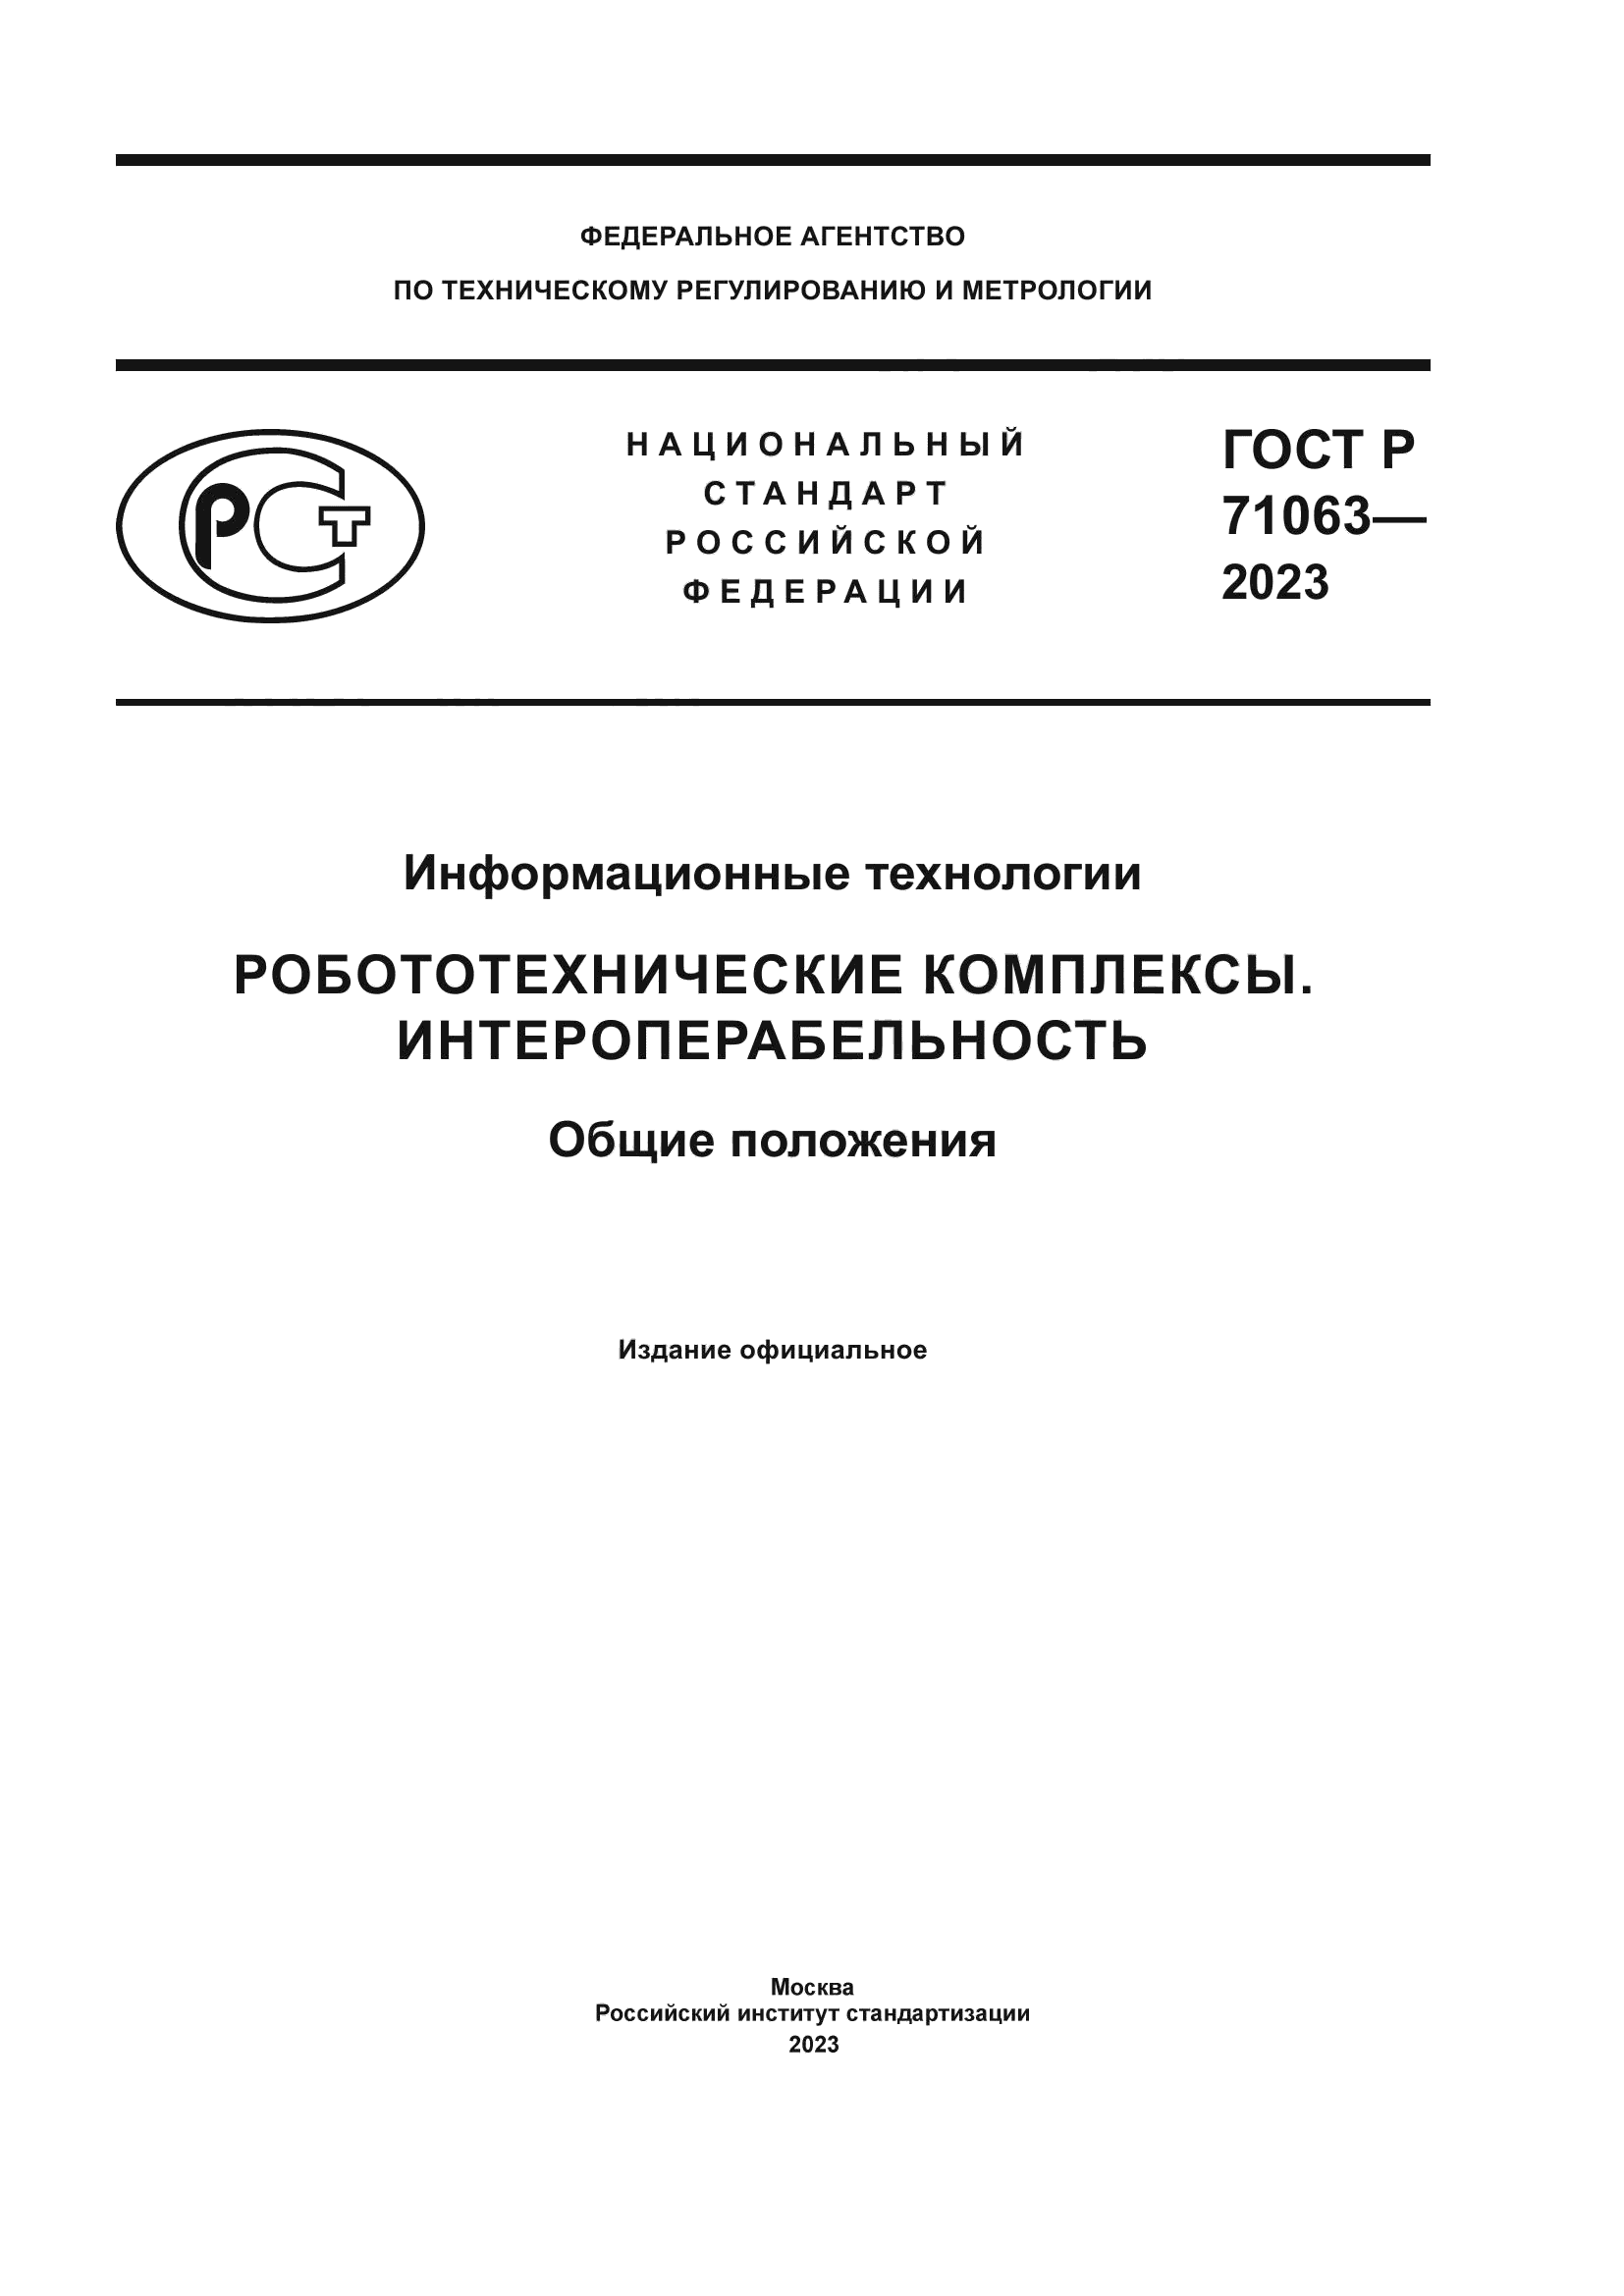 ГОСТ Р 71063-2023